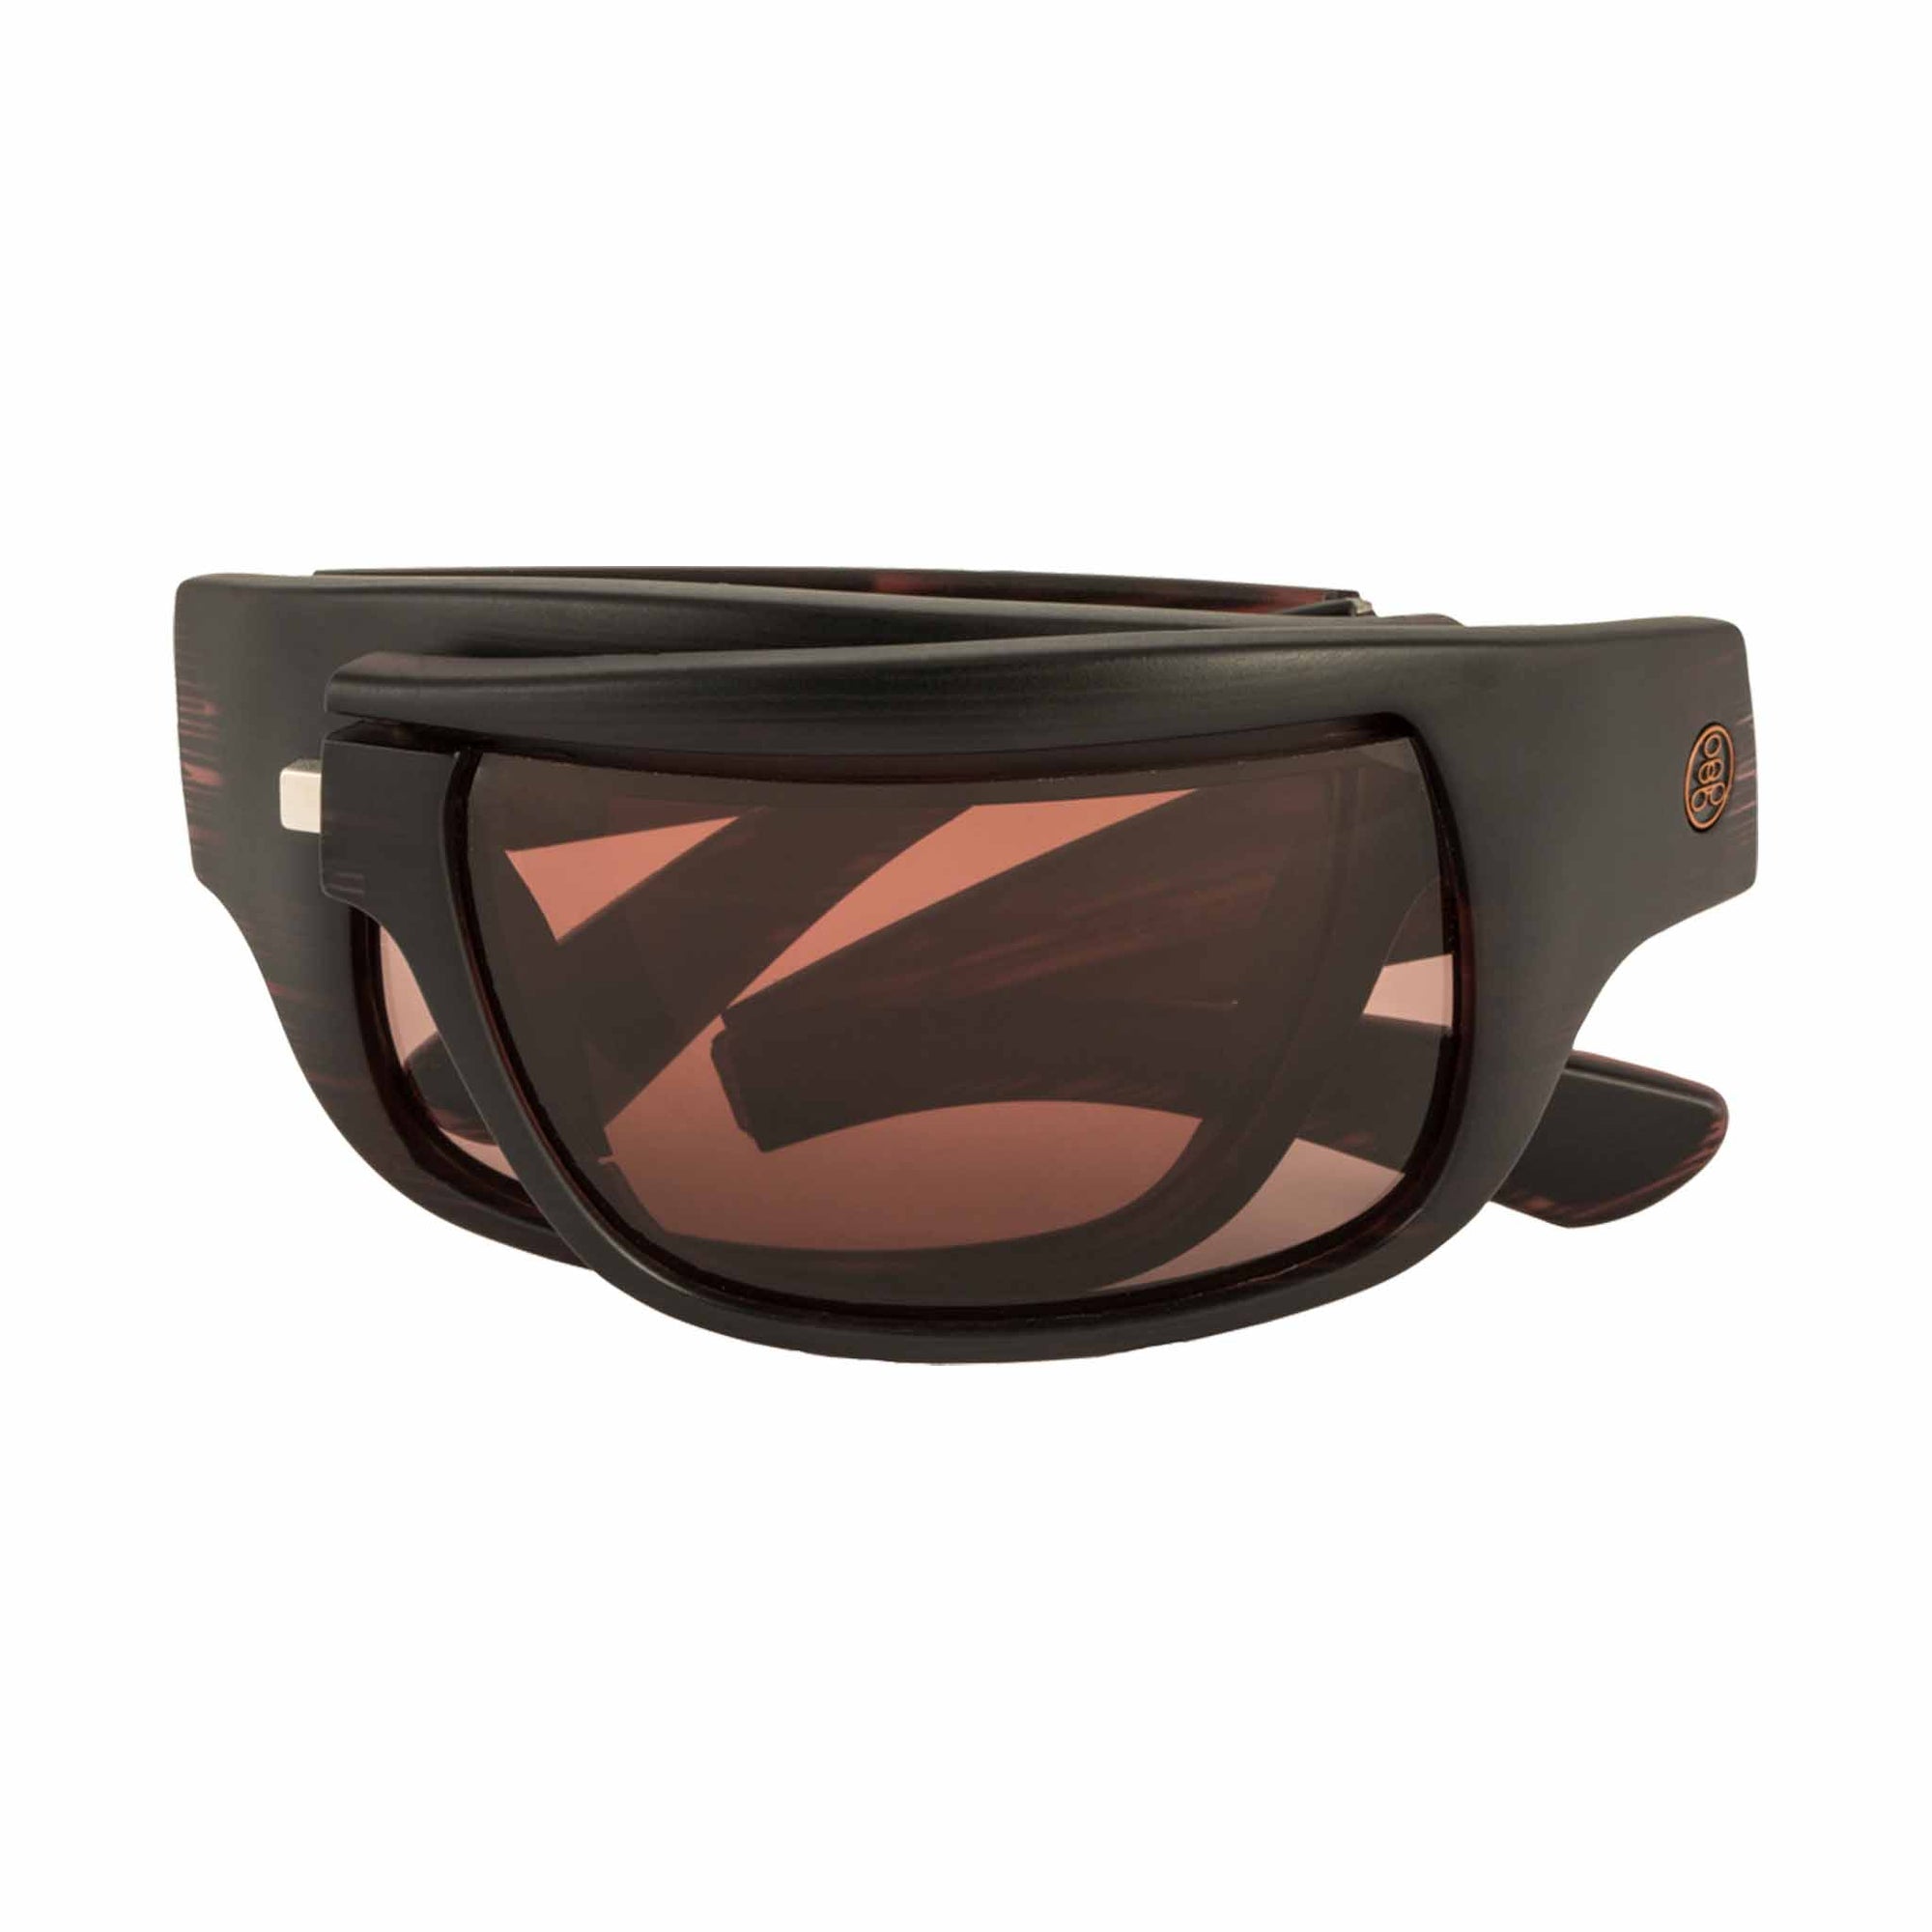 Popticals, Premium Compact Sunglasses, PopH2O, 010070-DUCP, Polarized Sunglasses, Matte Driftwood Frame, Copper Lenses, Compact View